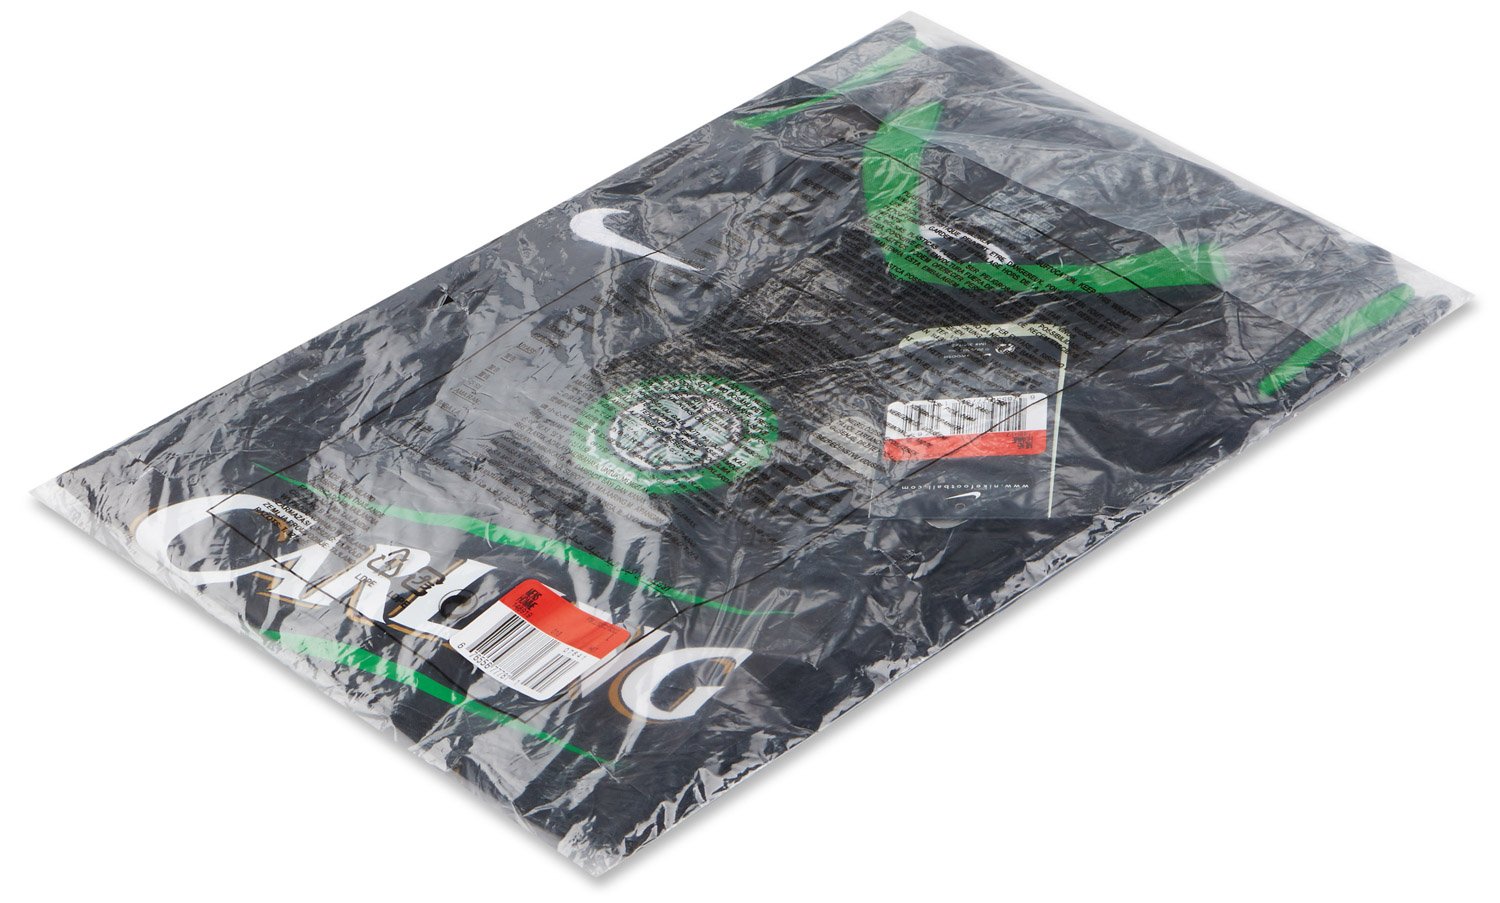 2005-06 Celtic Nike Training Shirt - Good 5/10 - (XL)